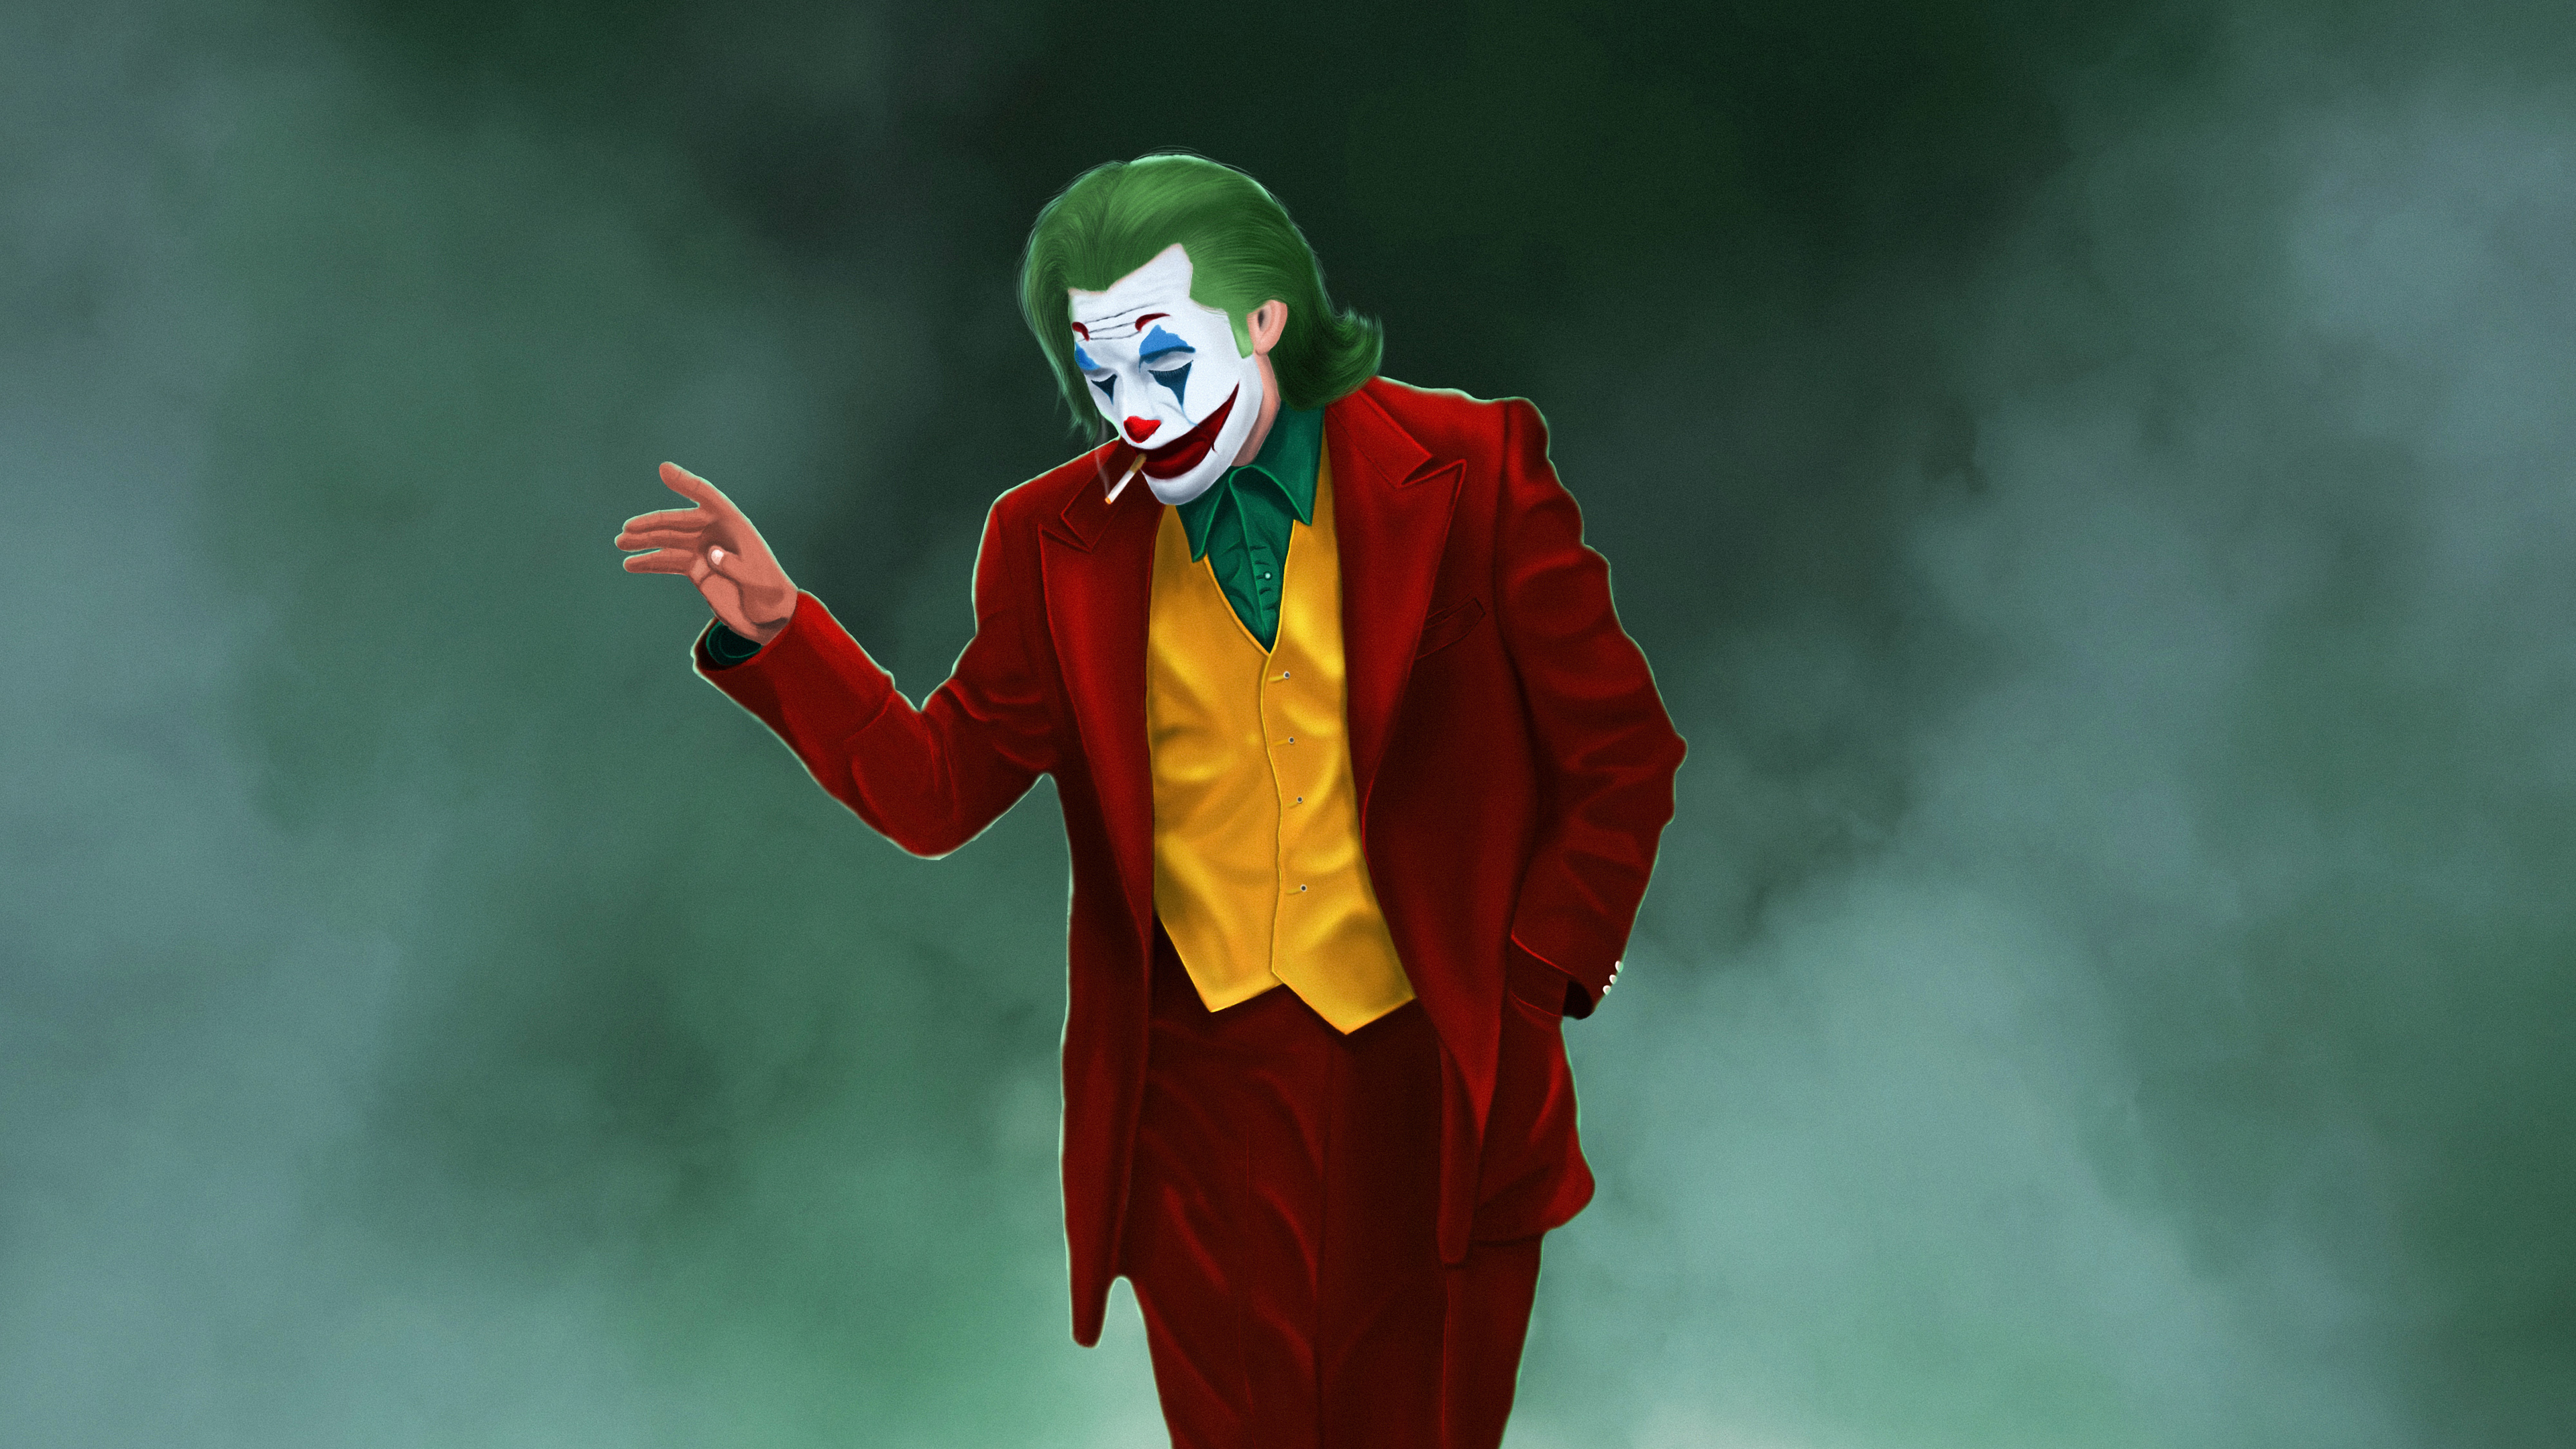 Wallpaper 4k Joker Movie 2019 Movies Wallpapers 4k Wallpapers Hd